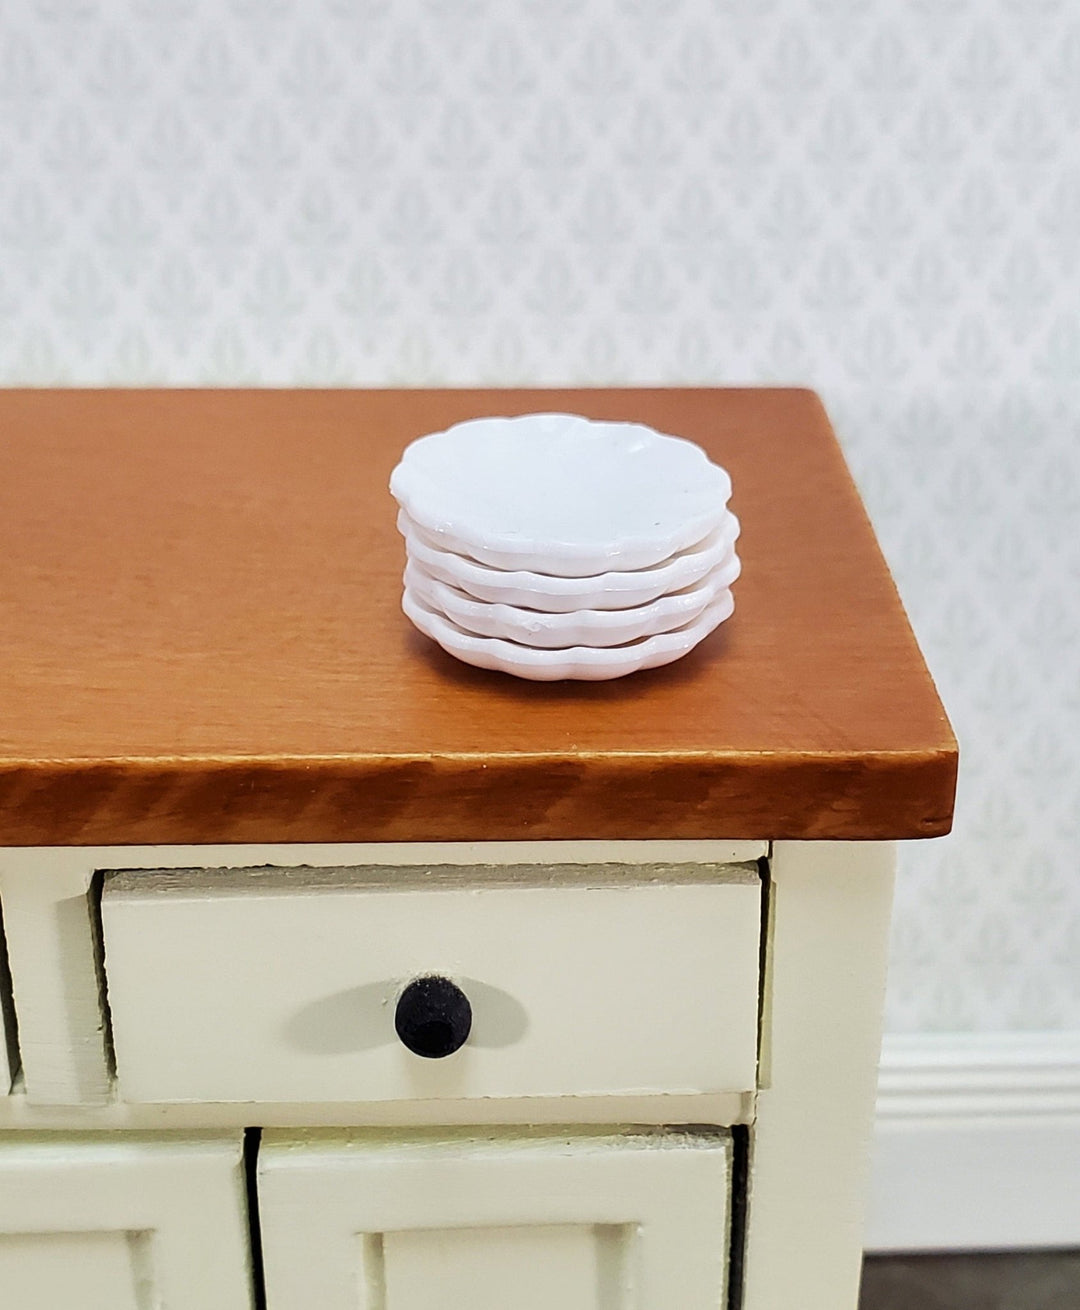 Dollhouse Small Plates Scalloped x4 White Decorative Edge Plastic 1:12 Scale Miniatures - Miniature Crush